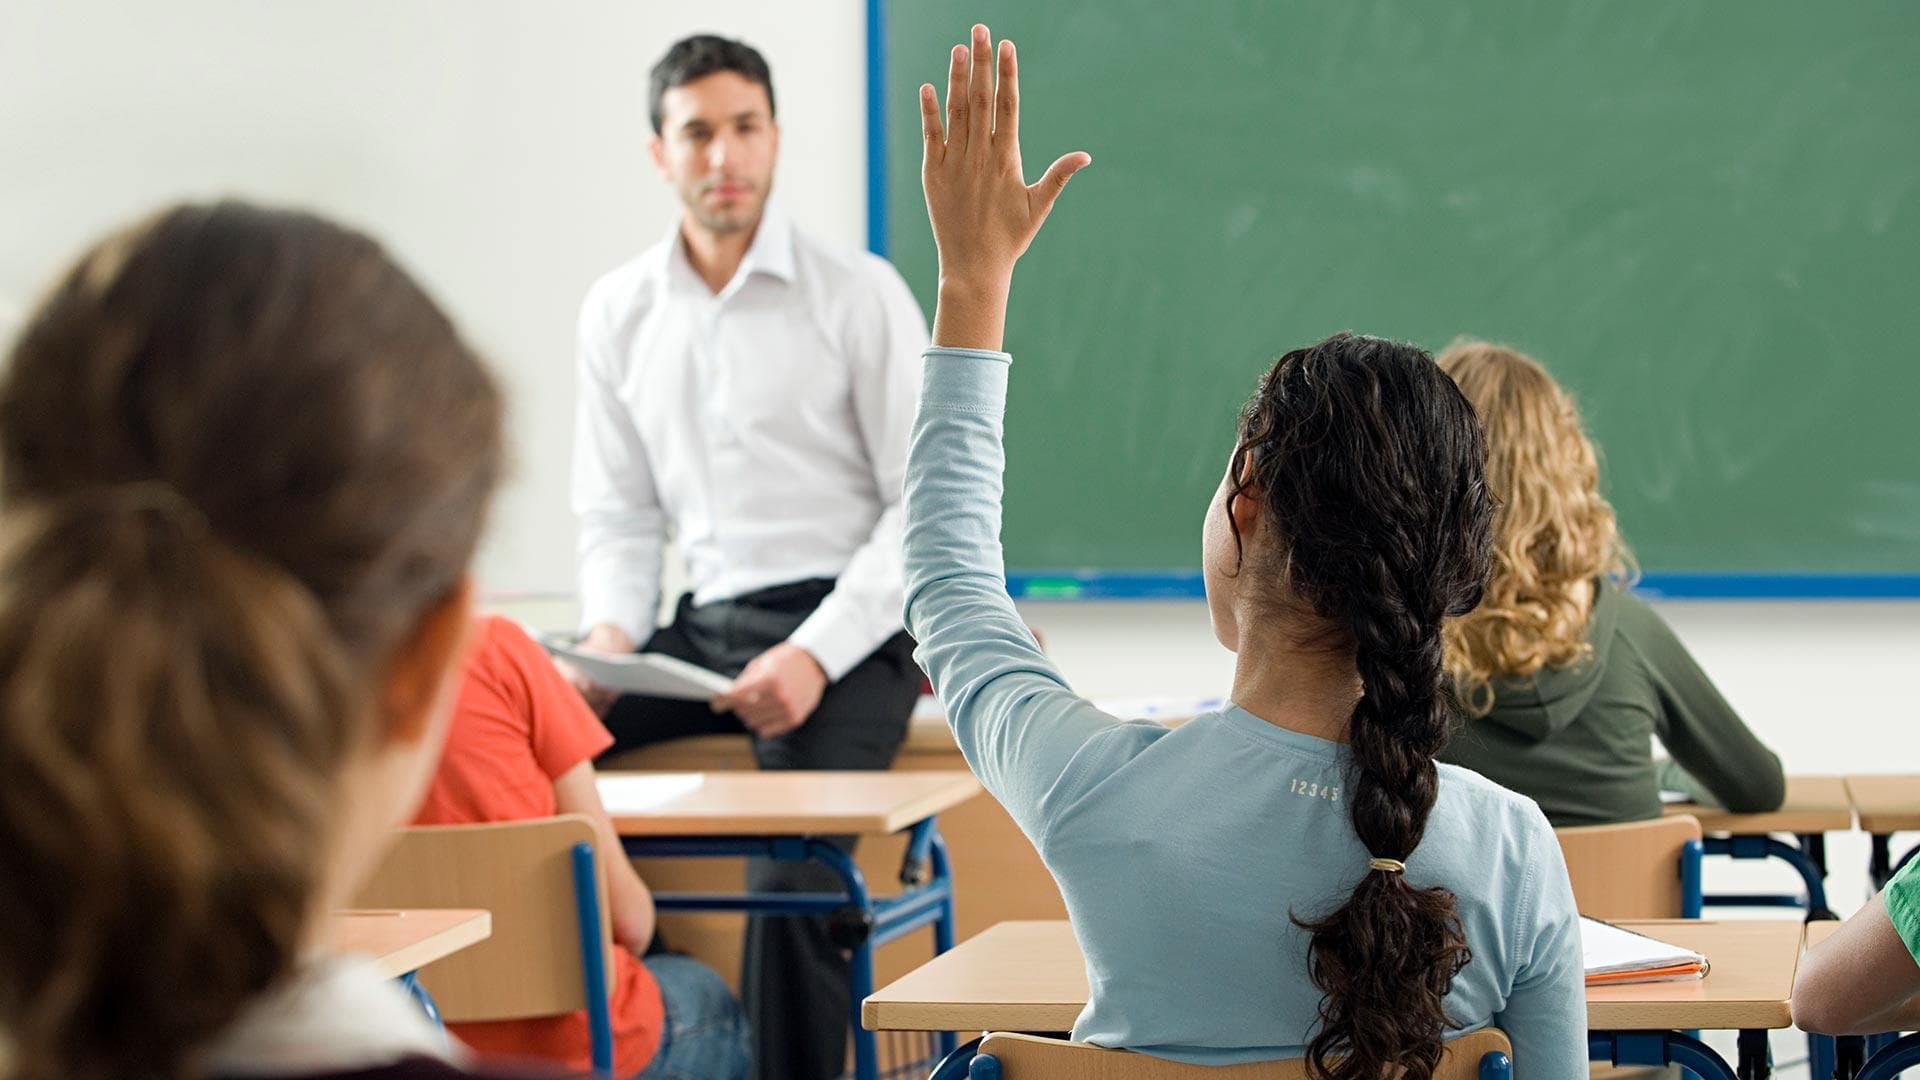 Student raises hand in classroom